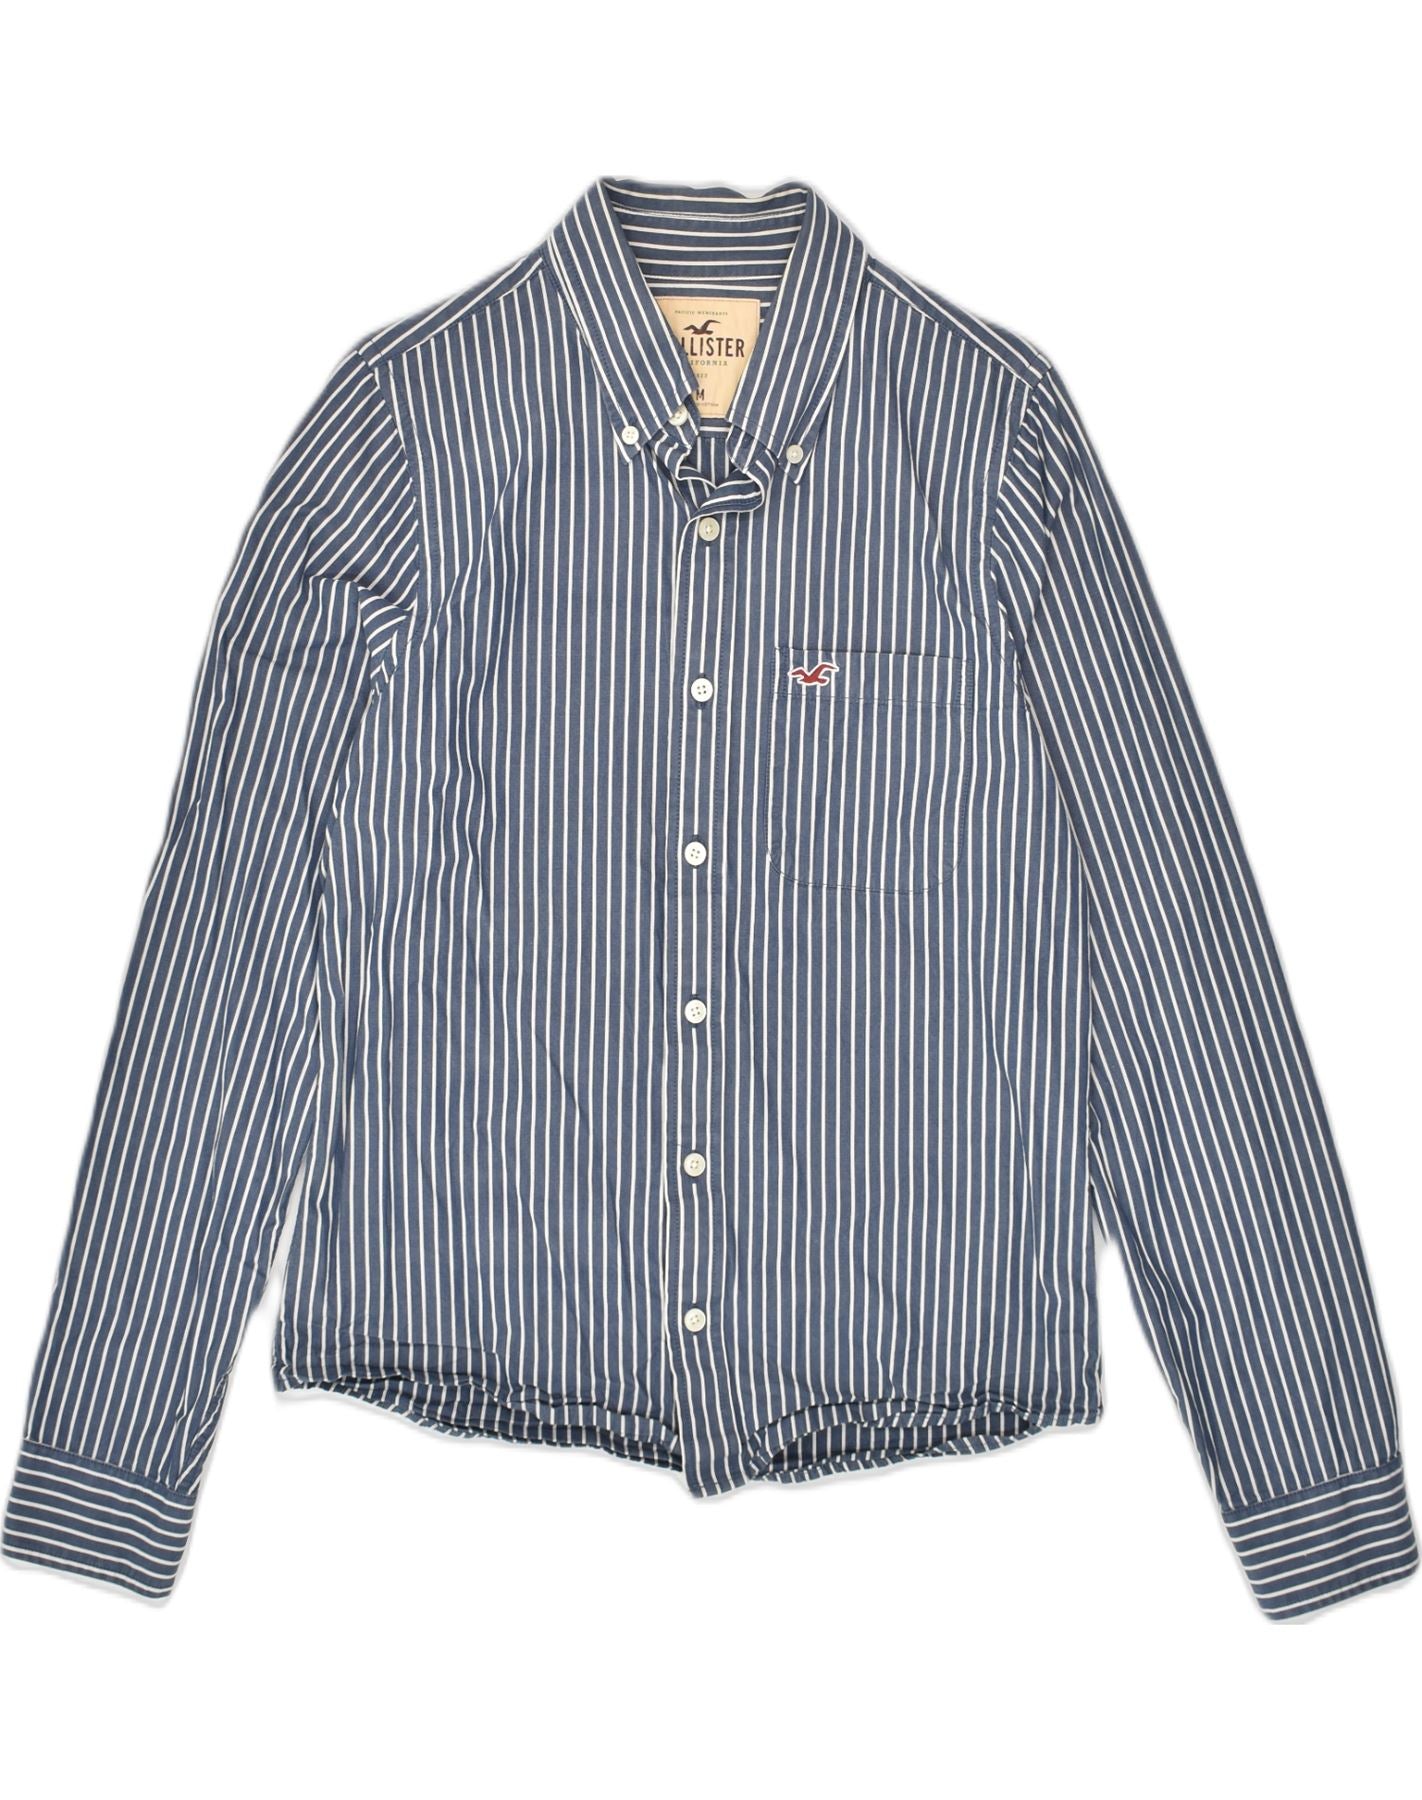 HOLLISTER Mens Shirt Medium Blue Striped Cotton